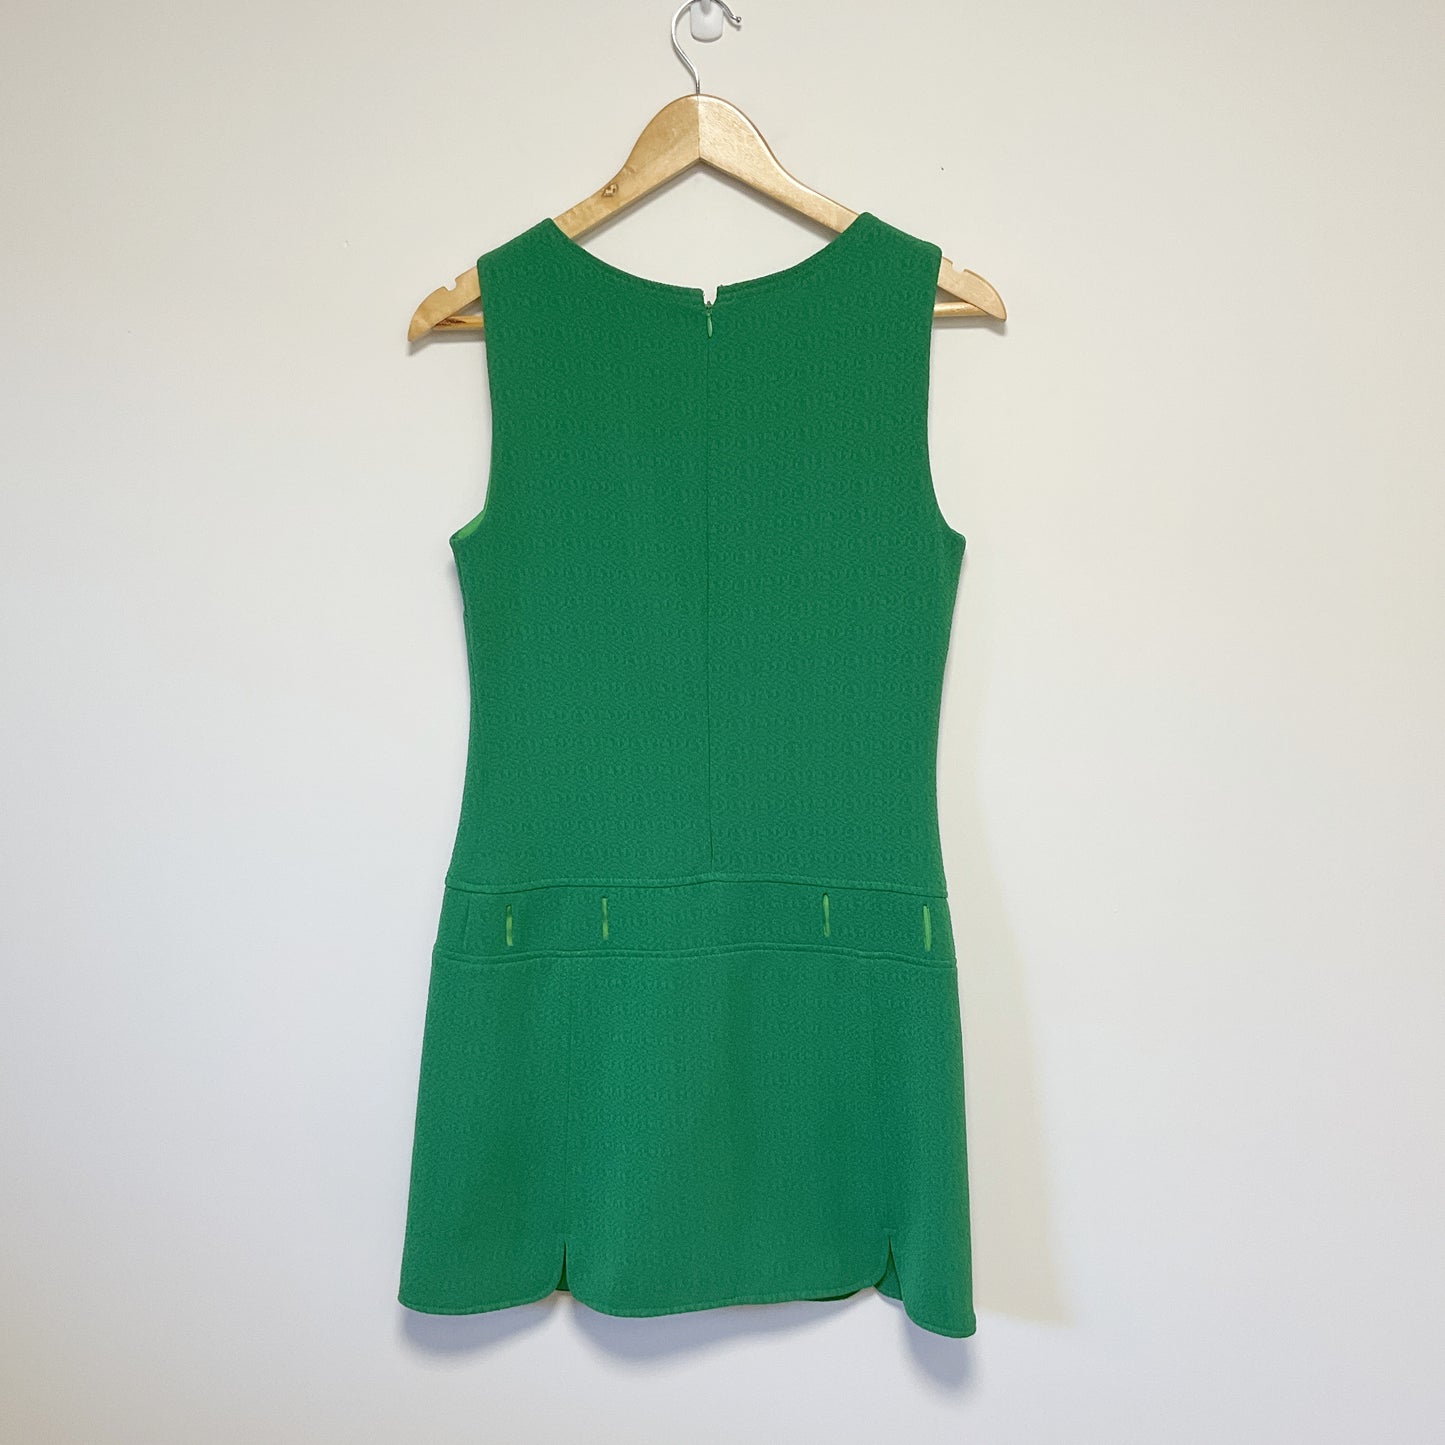 Tory Burch - Green Dress